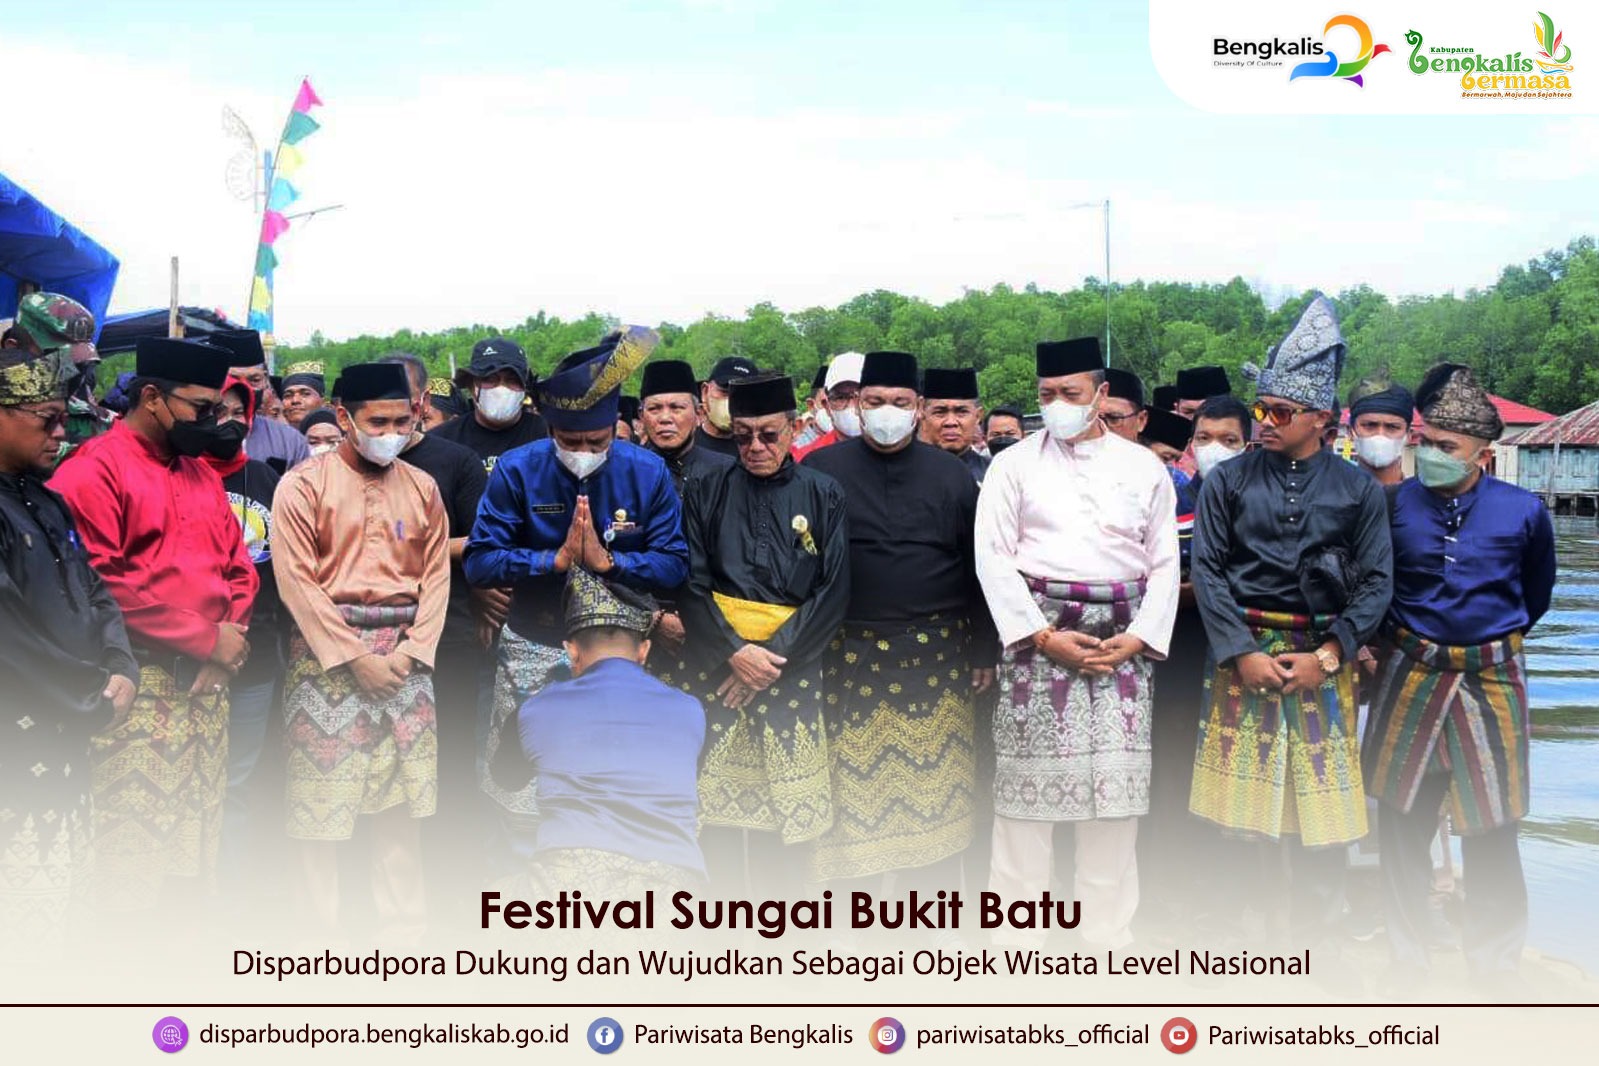 Dukung Festival Sungai Bukit Batu Sebagai Objek Wisata Nasional 